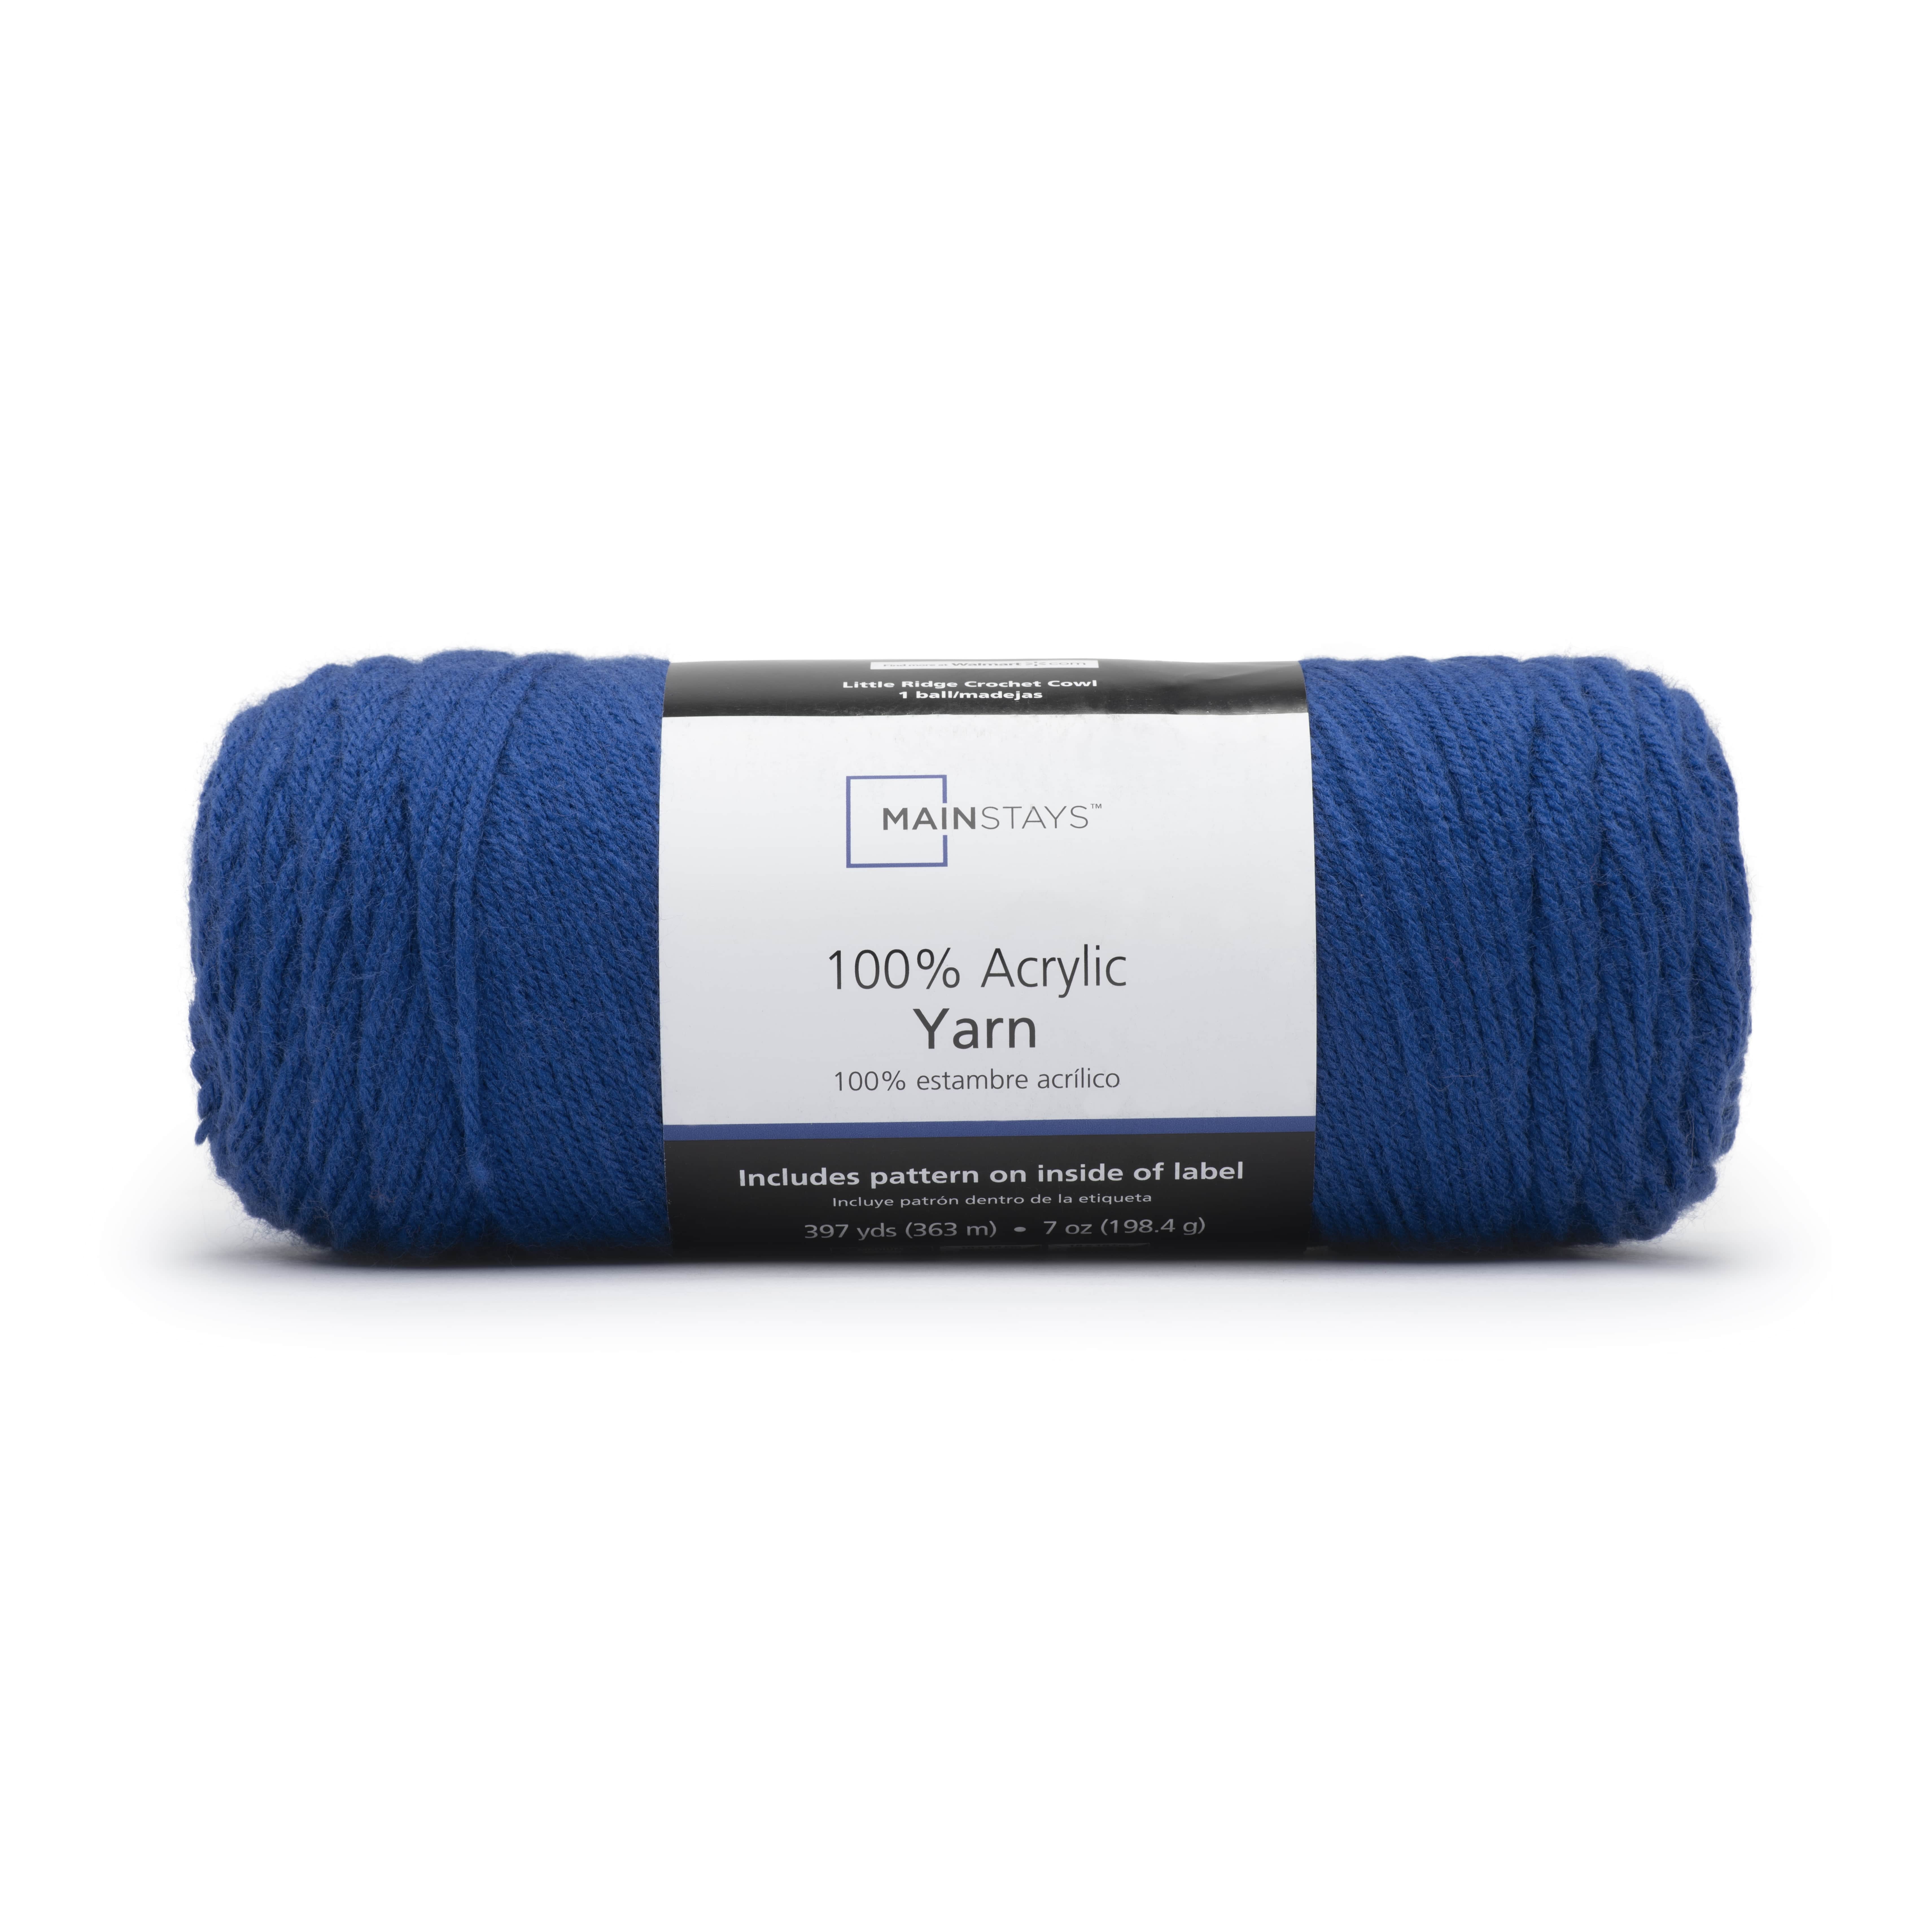 Hand knit cowl in soft powder blue with flecks of metallic blue.